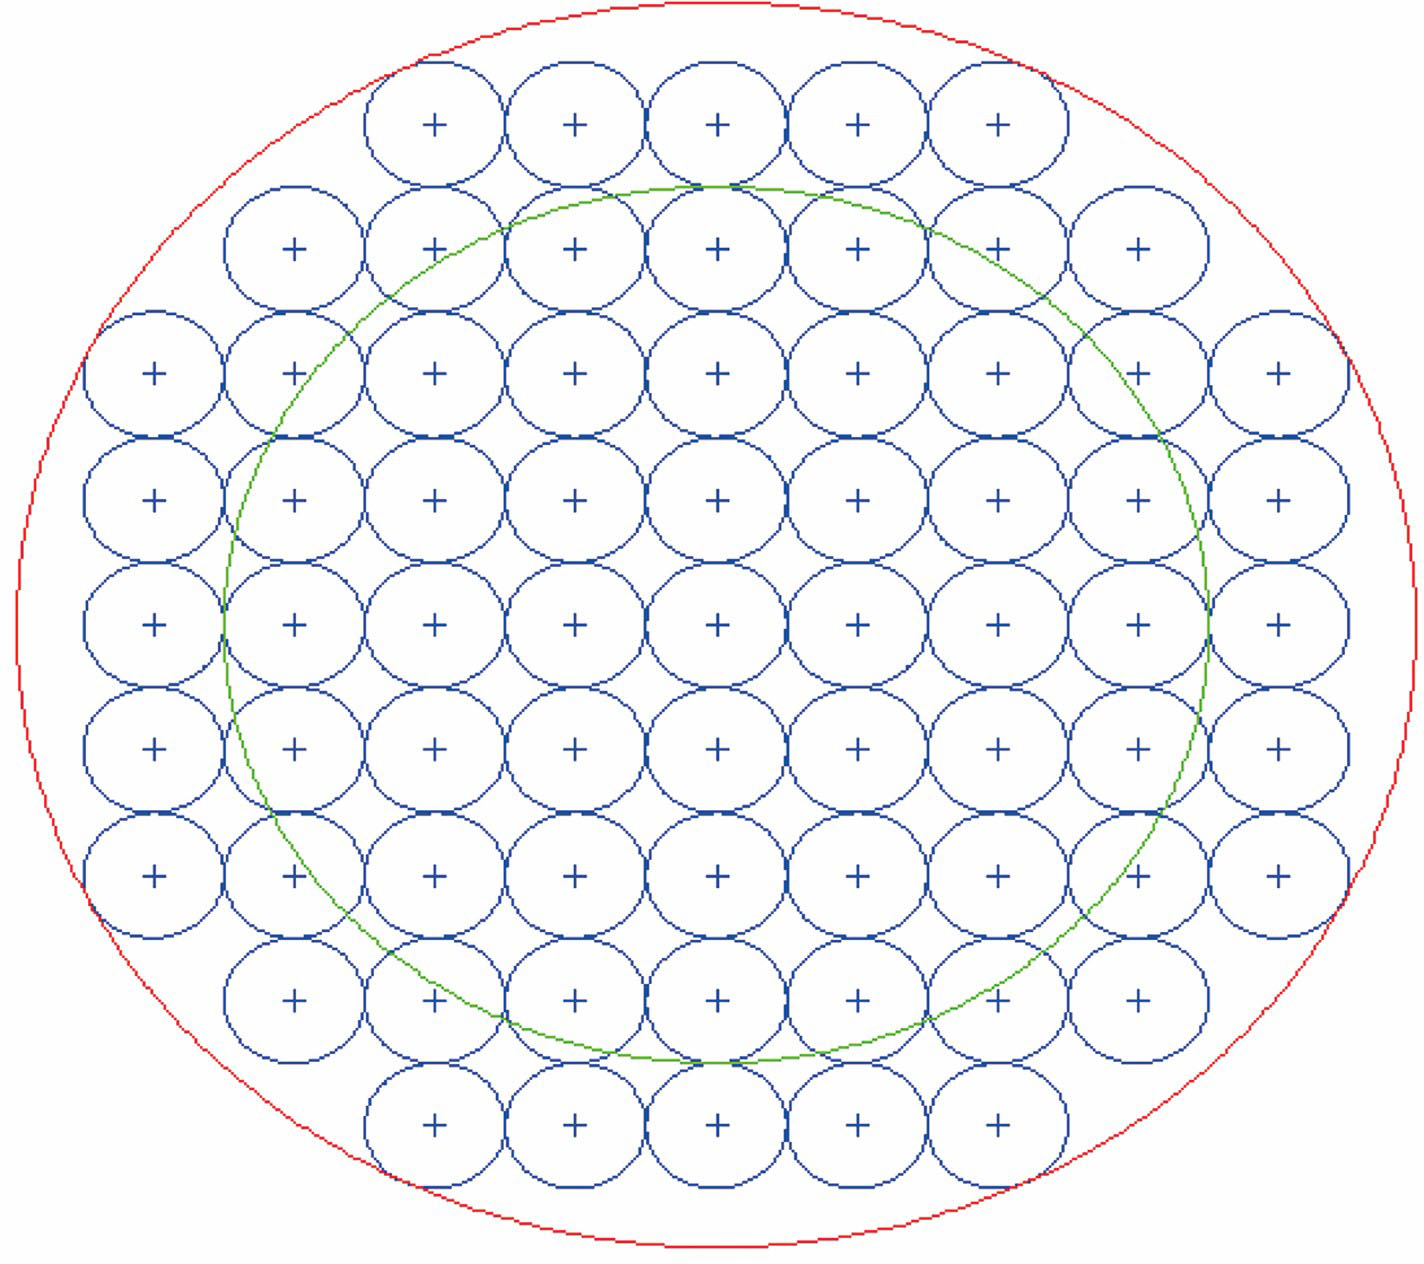 Actuator distribution of 69-actuator deformable mirror